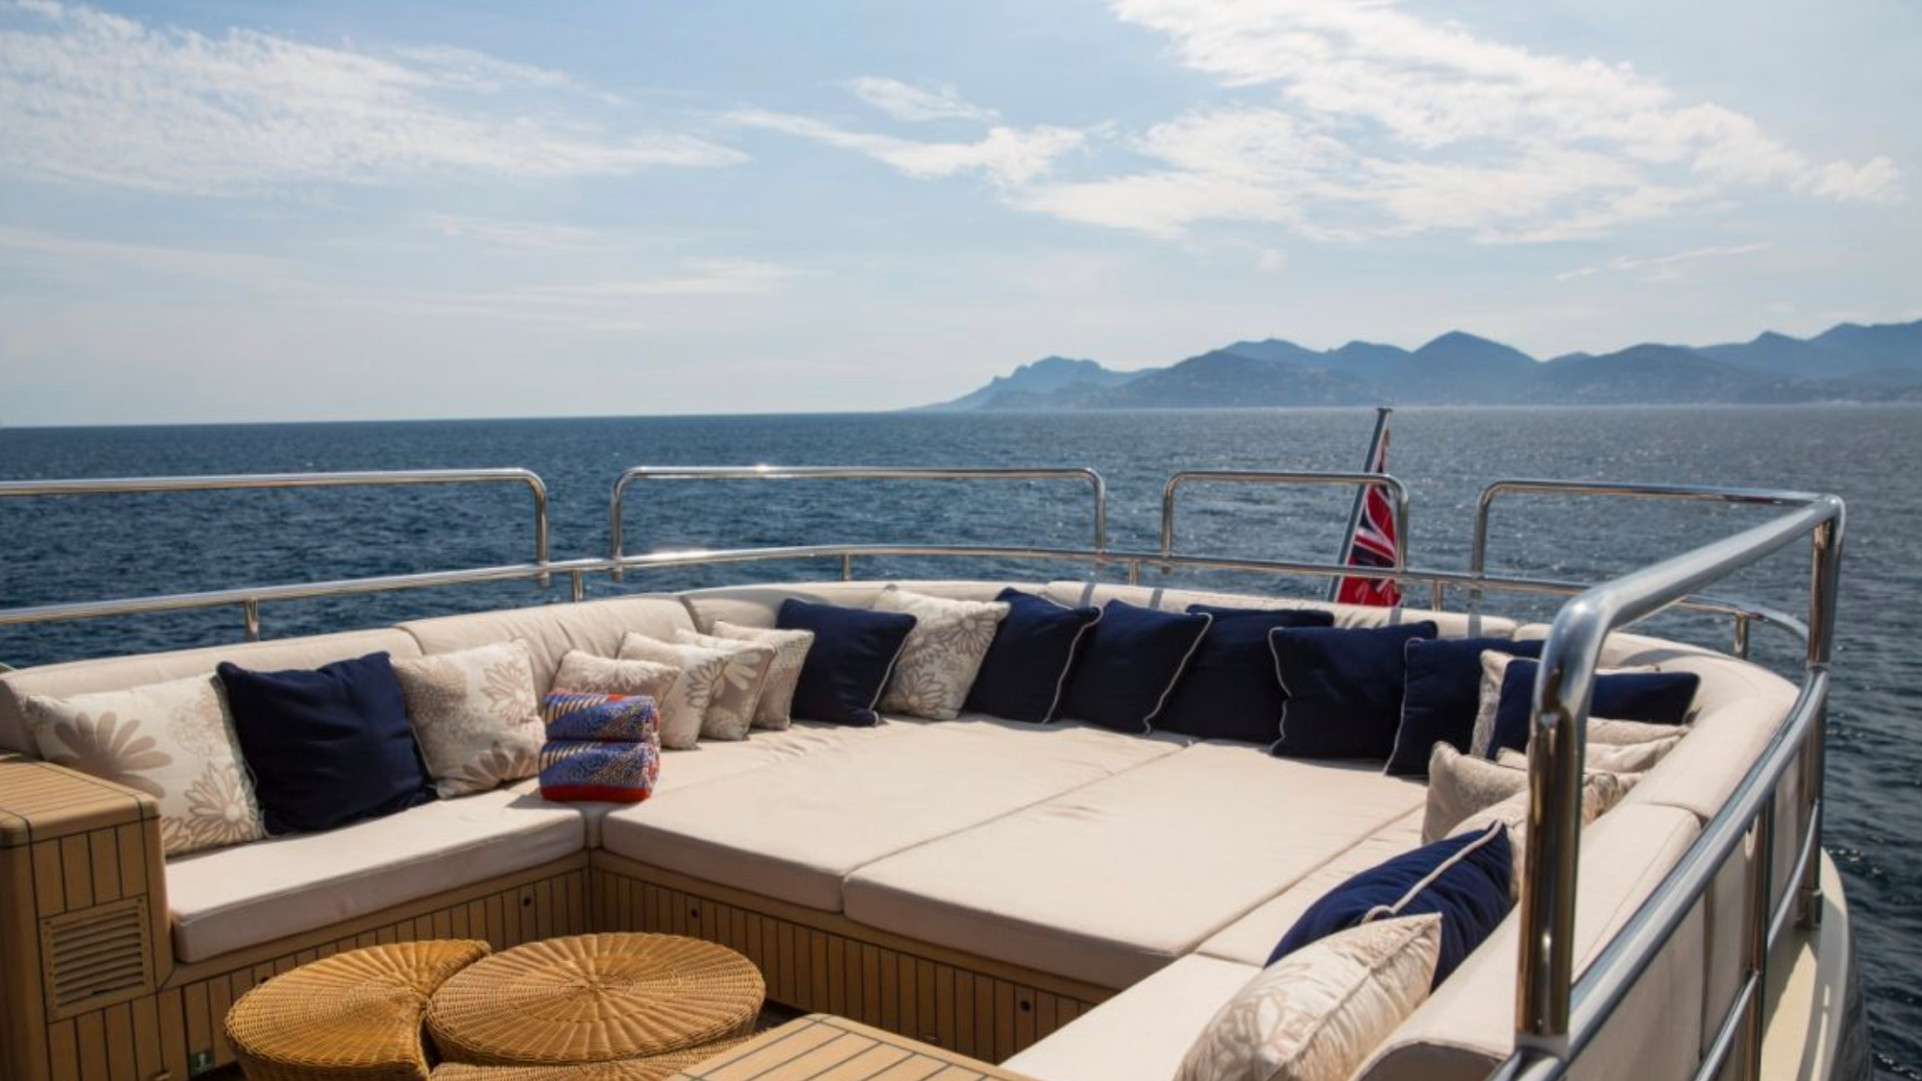 YCM 120 - Superyacht charter British Virgin Island & Boat hire in Riviera, Corsica, Sardinia, Spain, Balearics, Caribbean 5